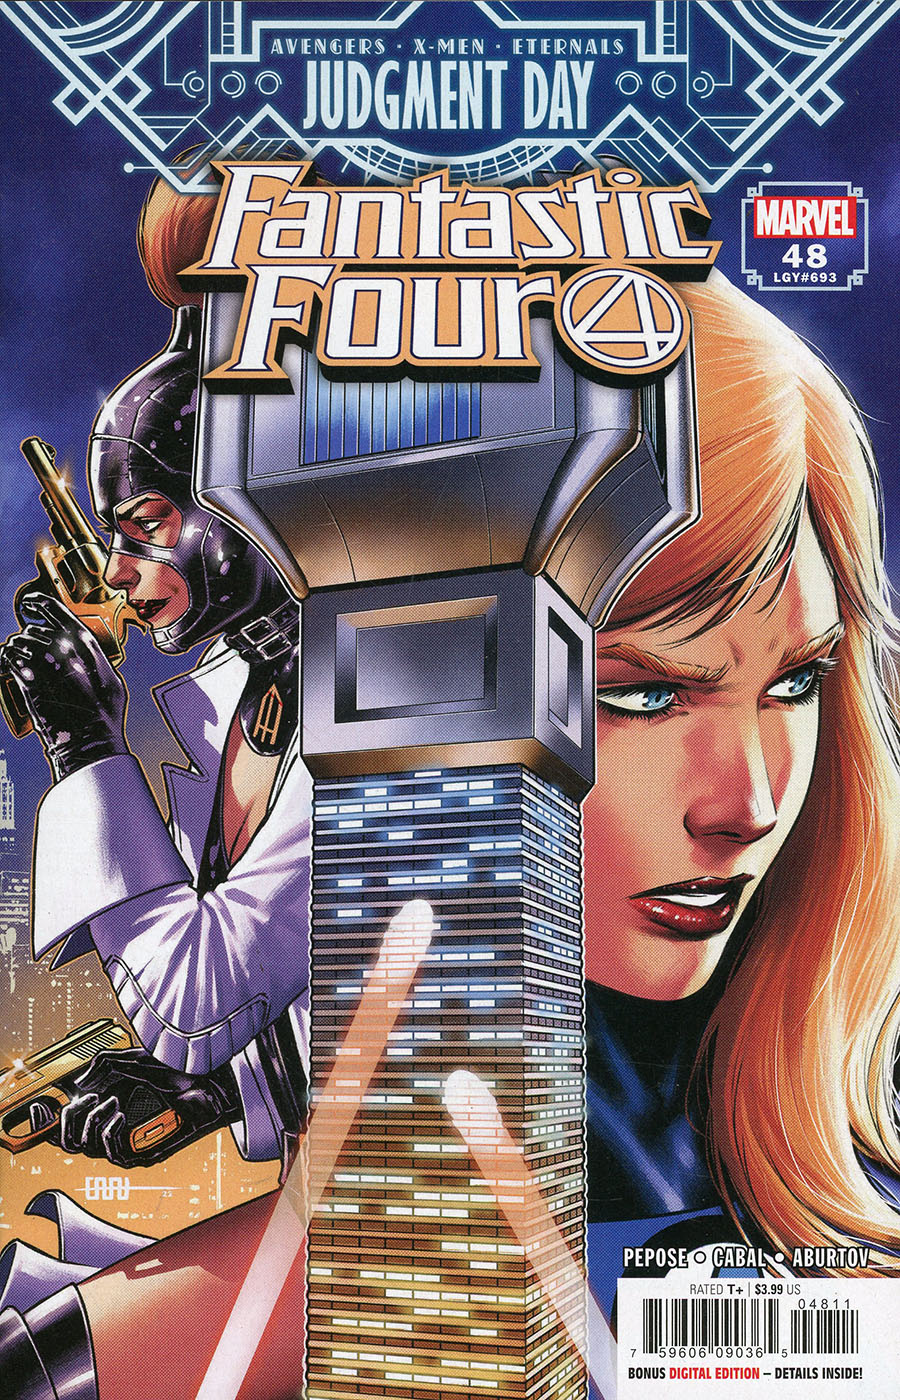 Fantastic Four Vol 6 #48 Cover A Regular CAFU Cover (A.X.E. Judgment Day Tie-In)